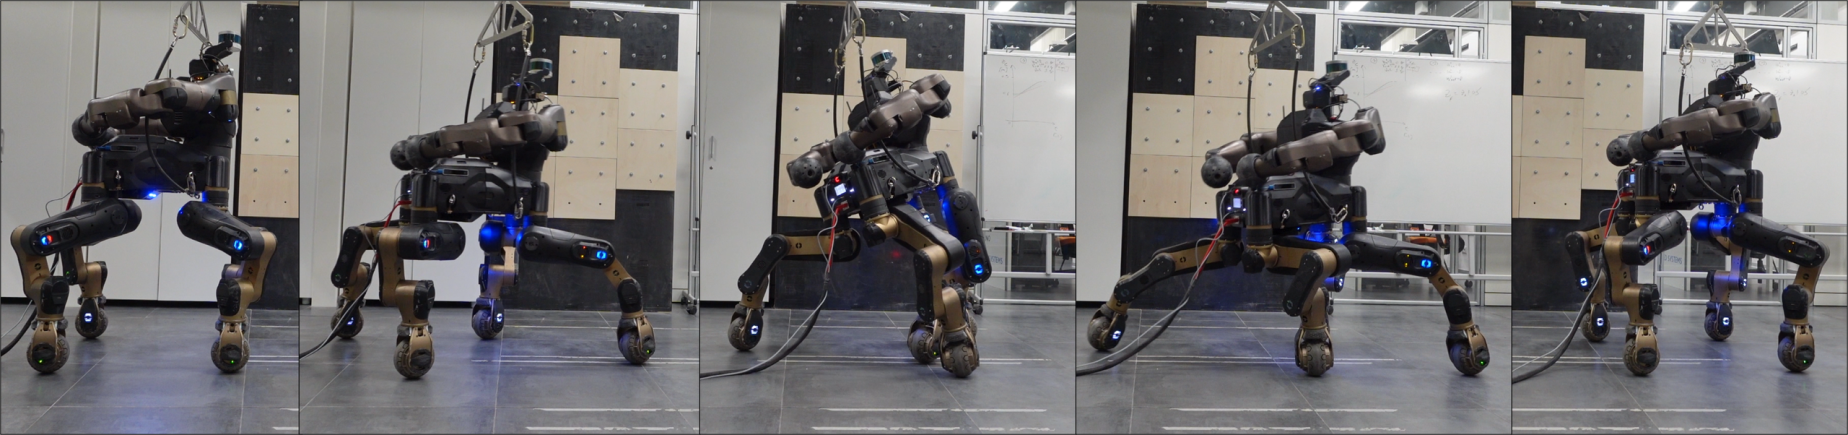 Centauro robot walking